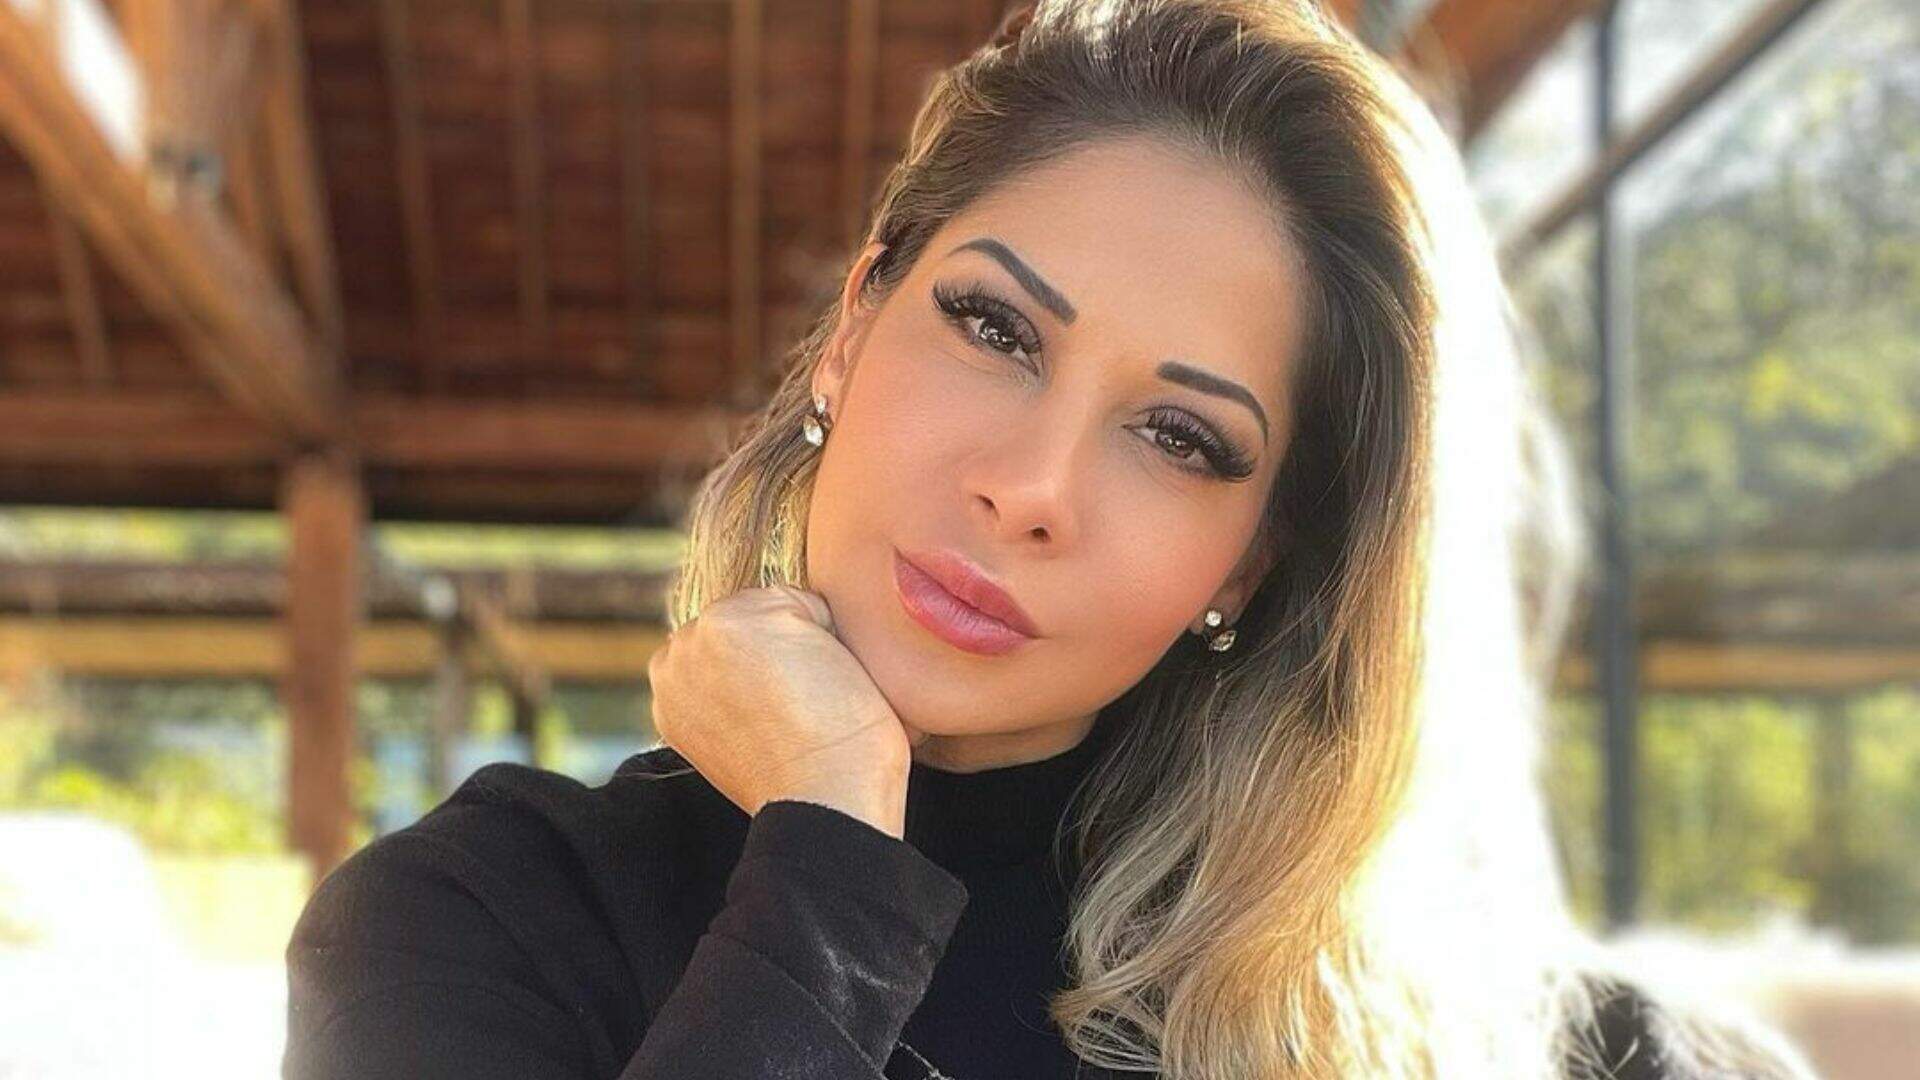 Maíra Cardi realiza procedimento cirúrgico nos olhos e alerta seguidores: “Nunca é algo simples”